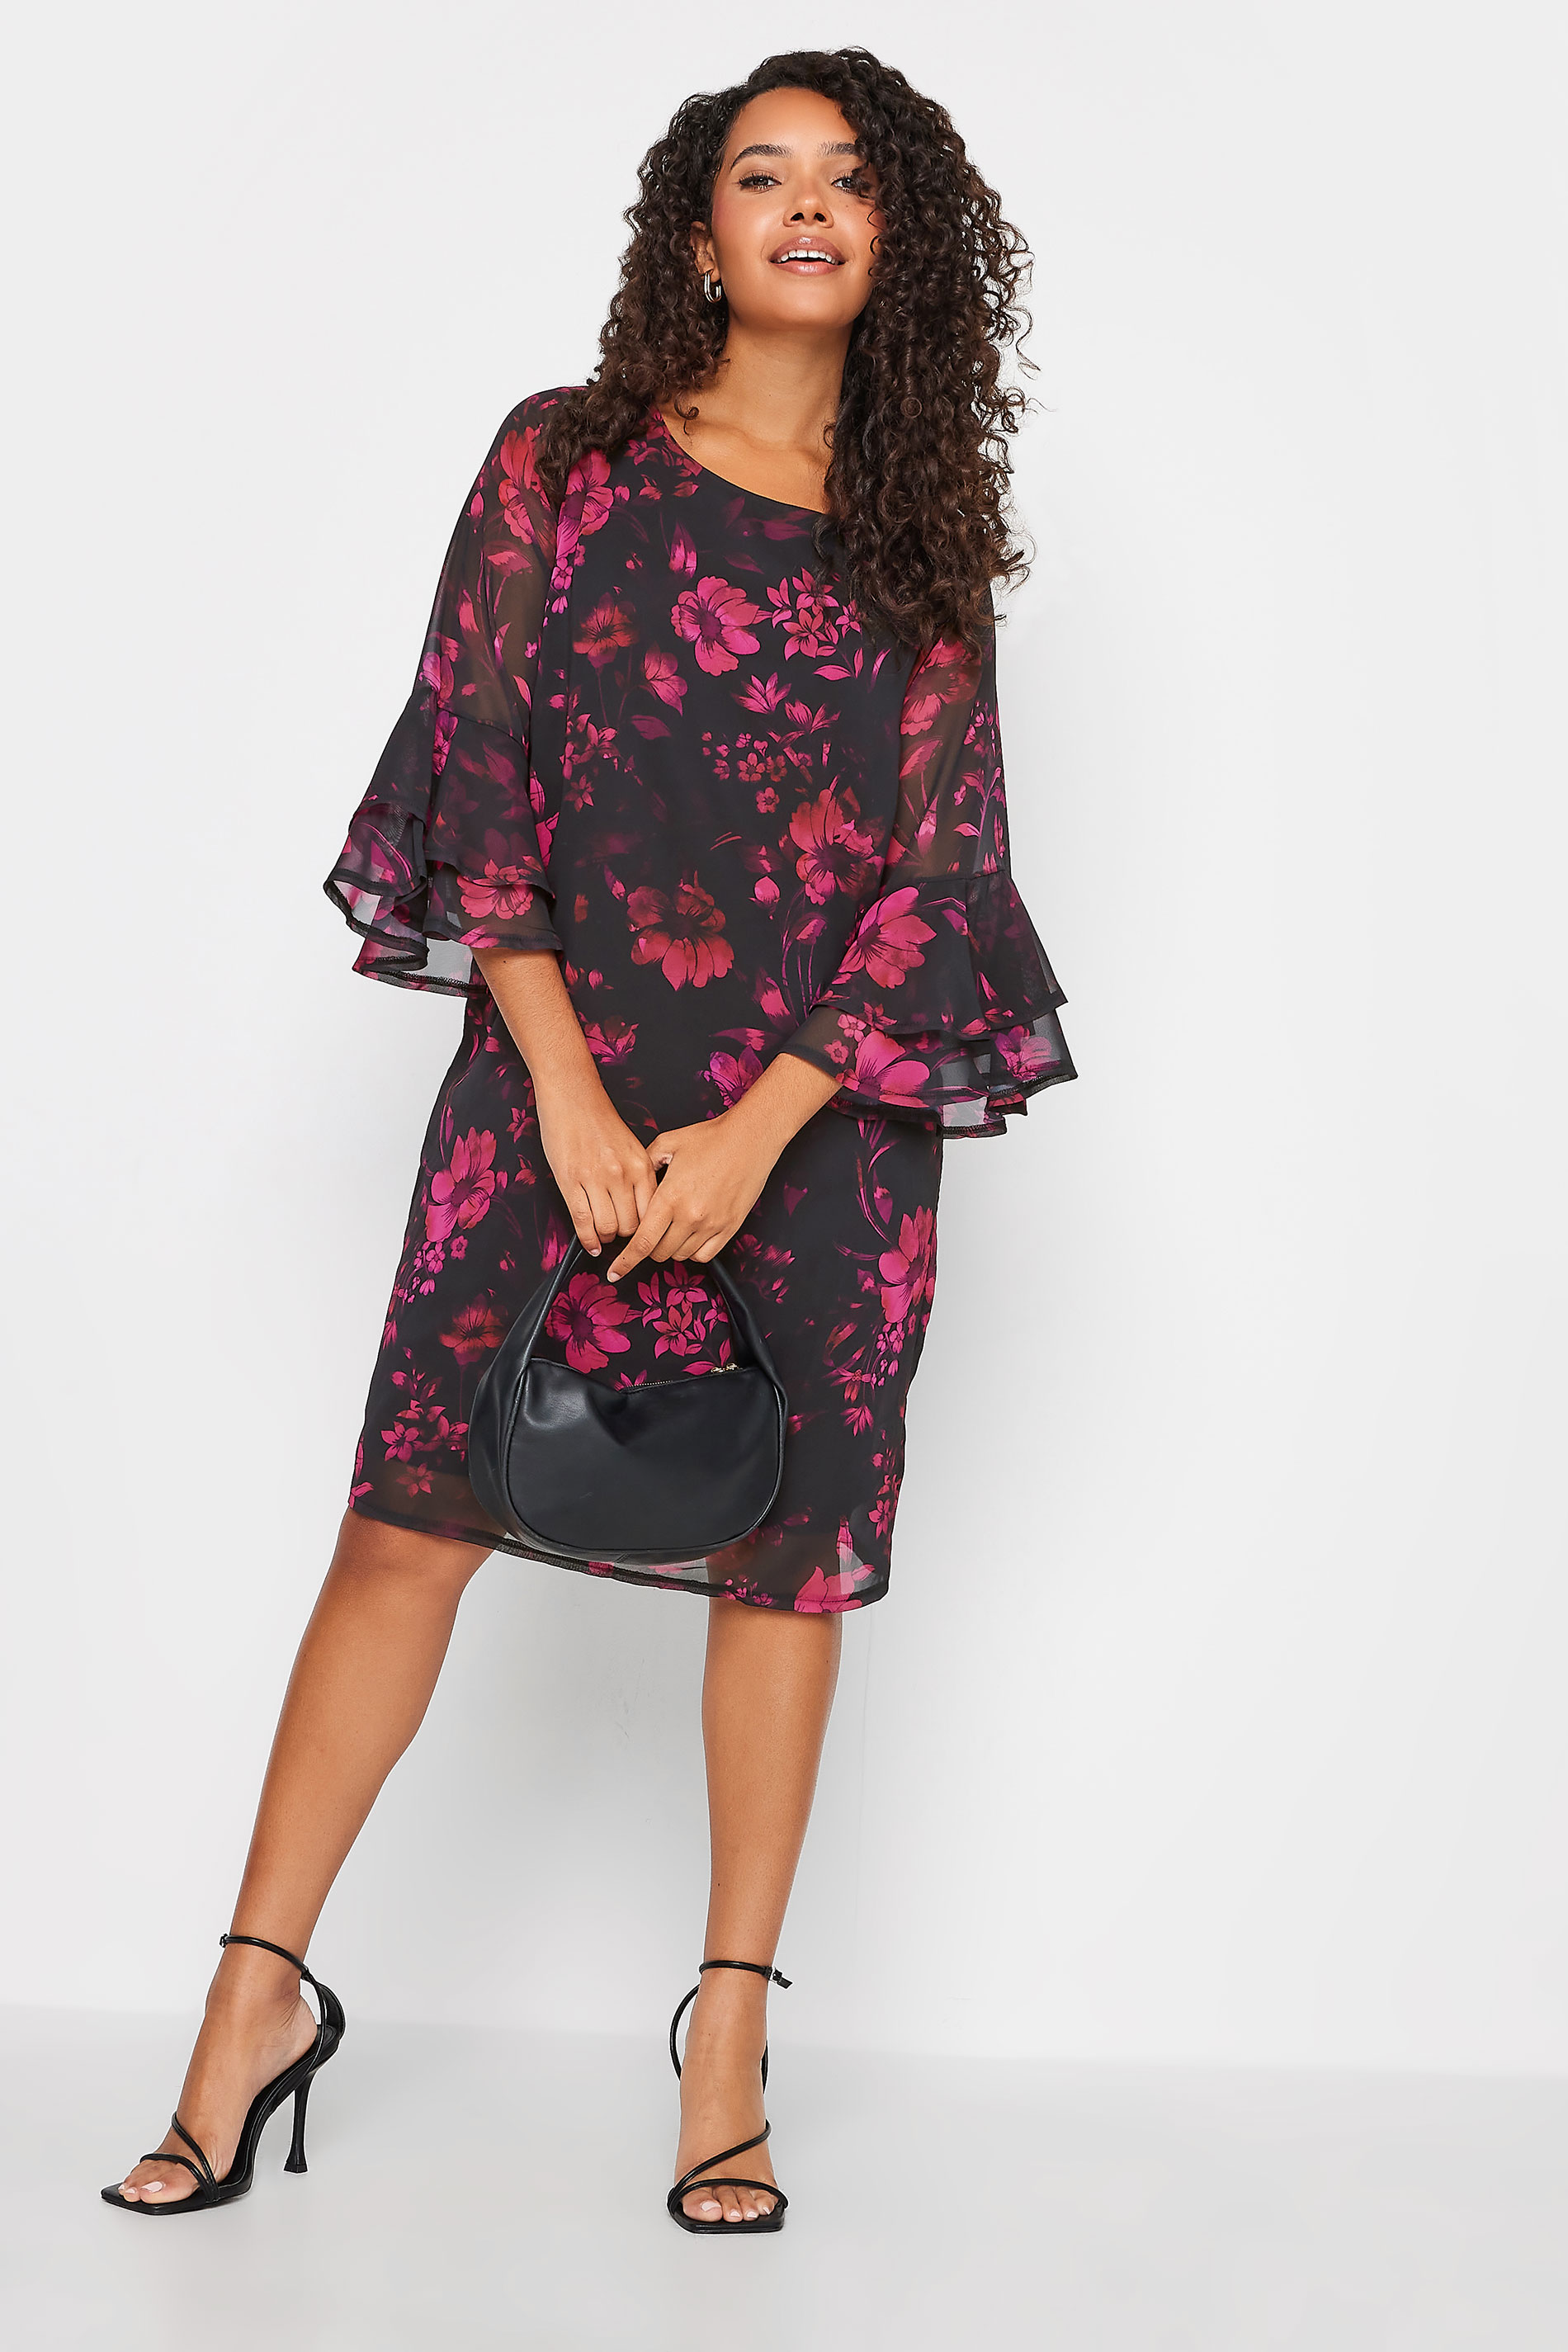 M&Co Black Floral Print Flute Sleeve Shift Dress | M&Co